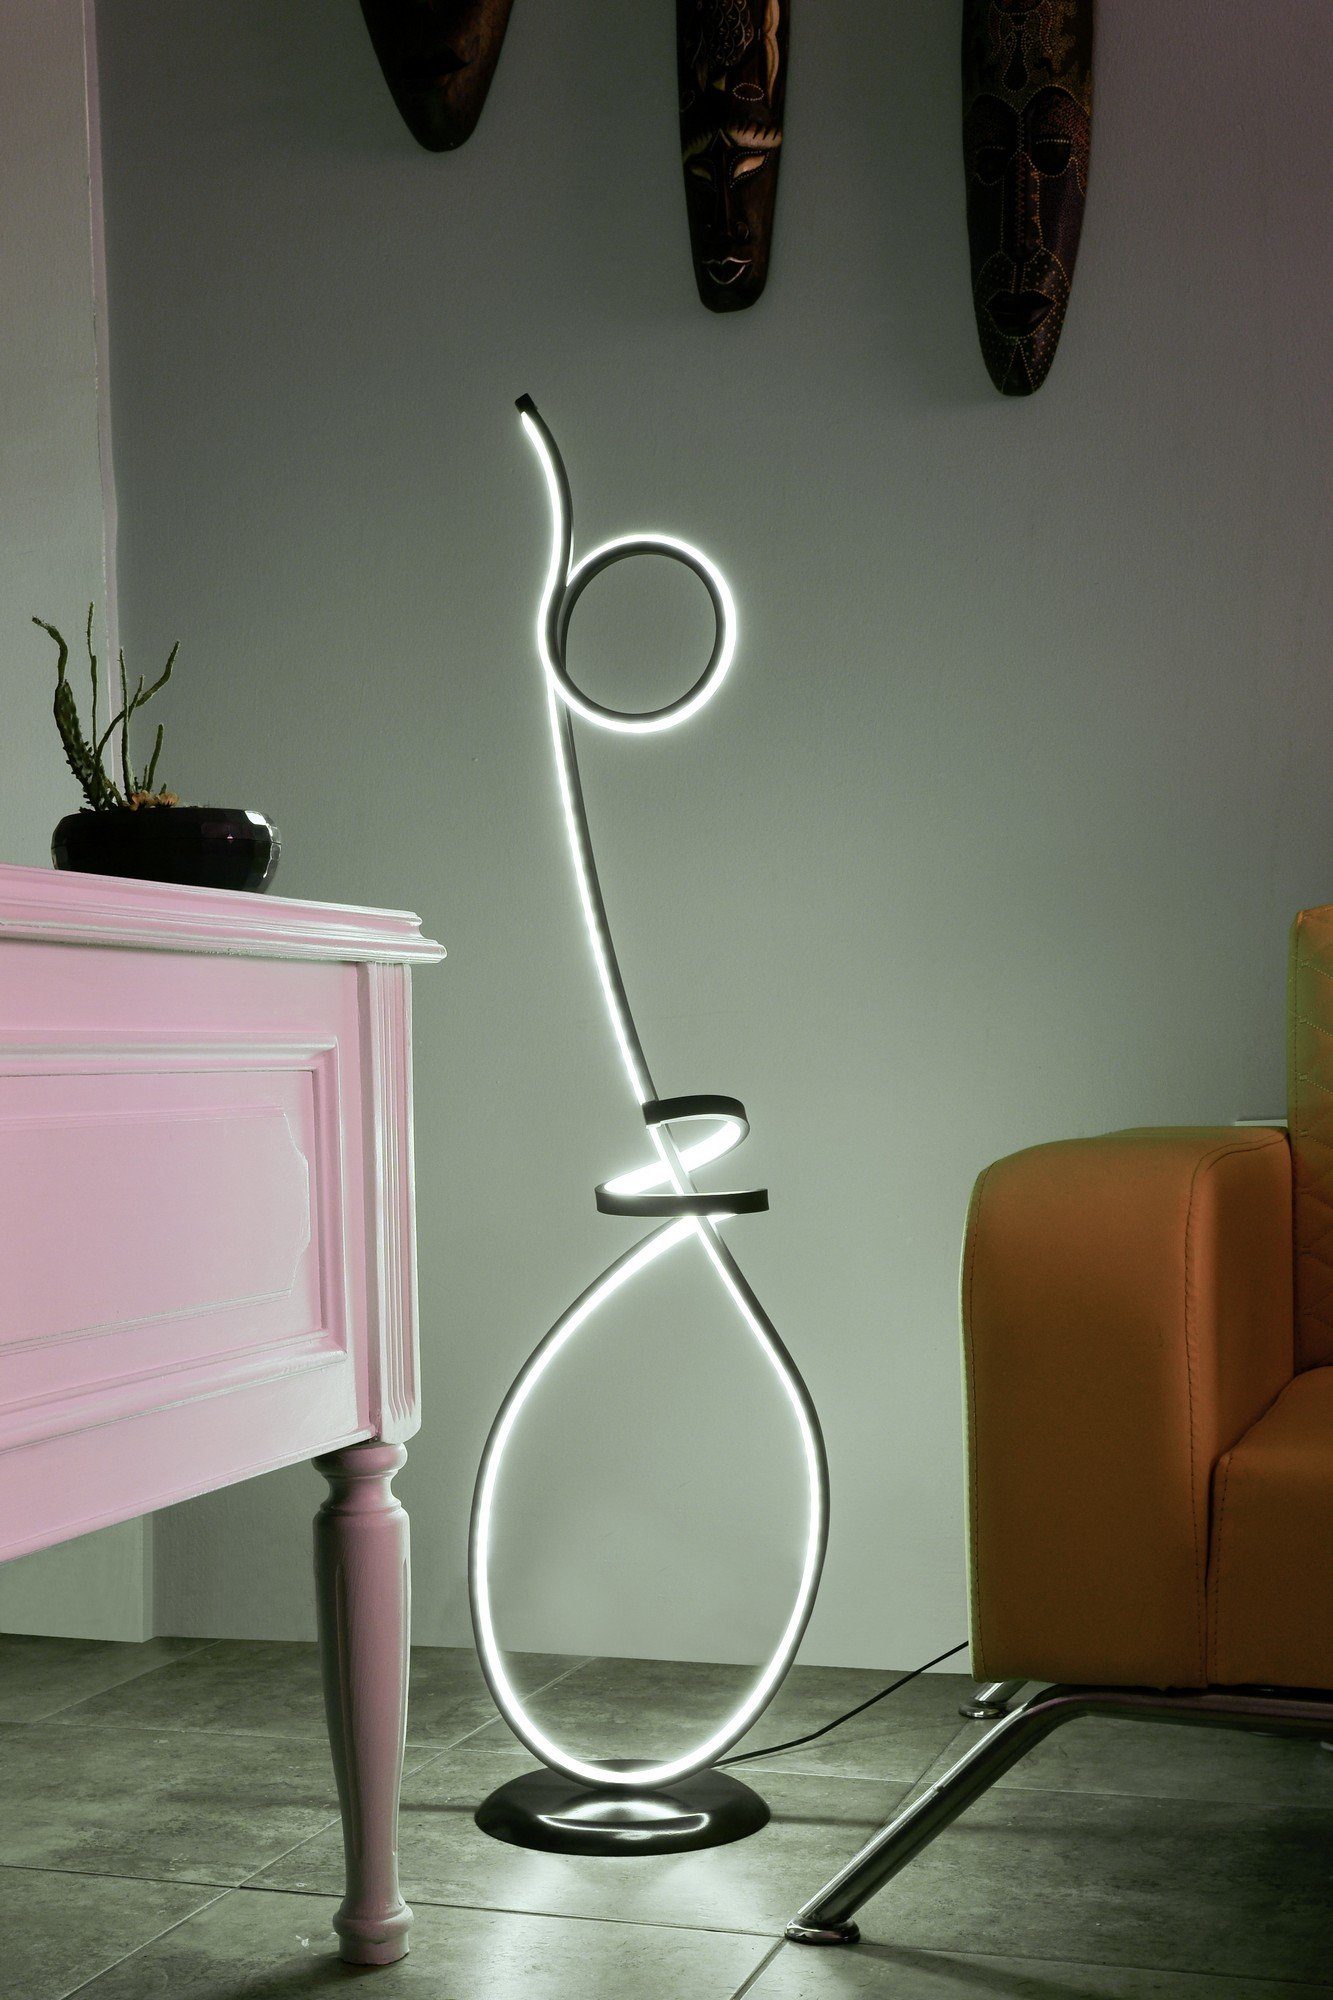 Stehlampe CRL, 100% 25 30 x cm, Black Opviq Picasso Weiß, 120 x Aluminium